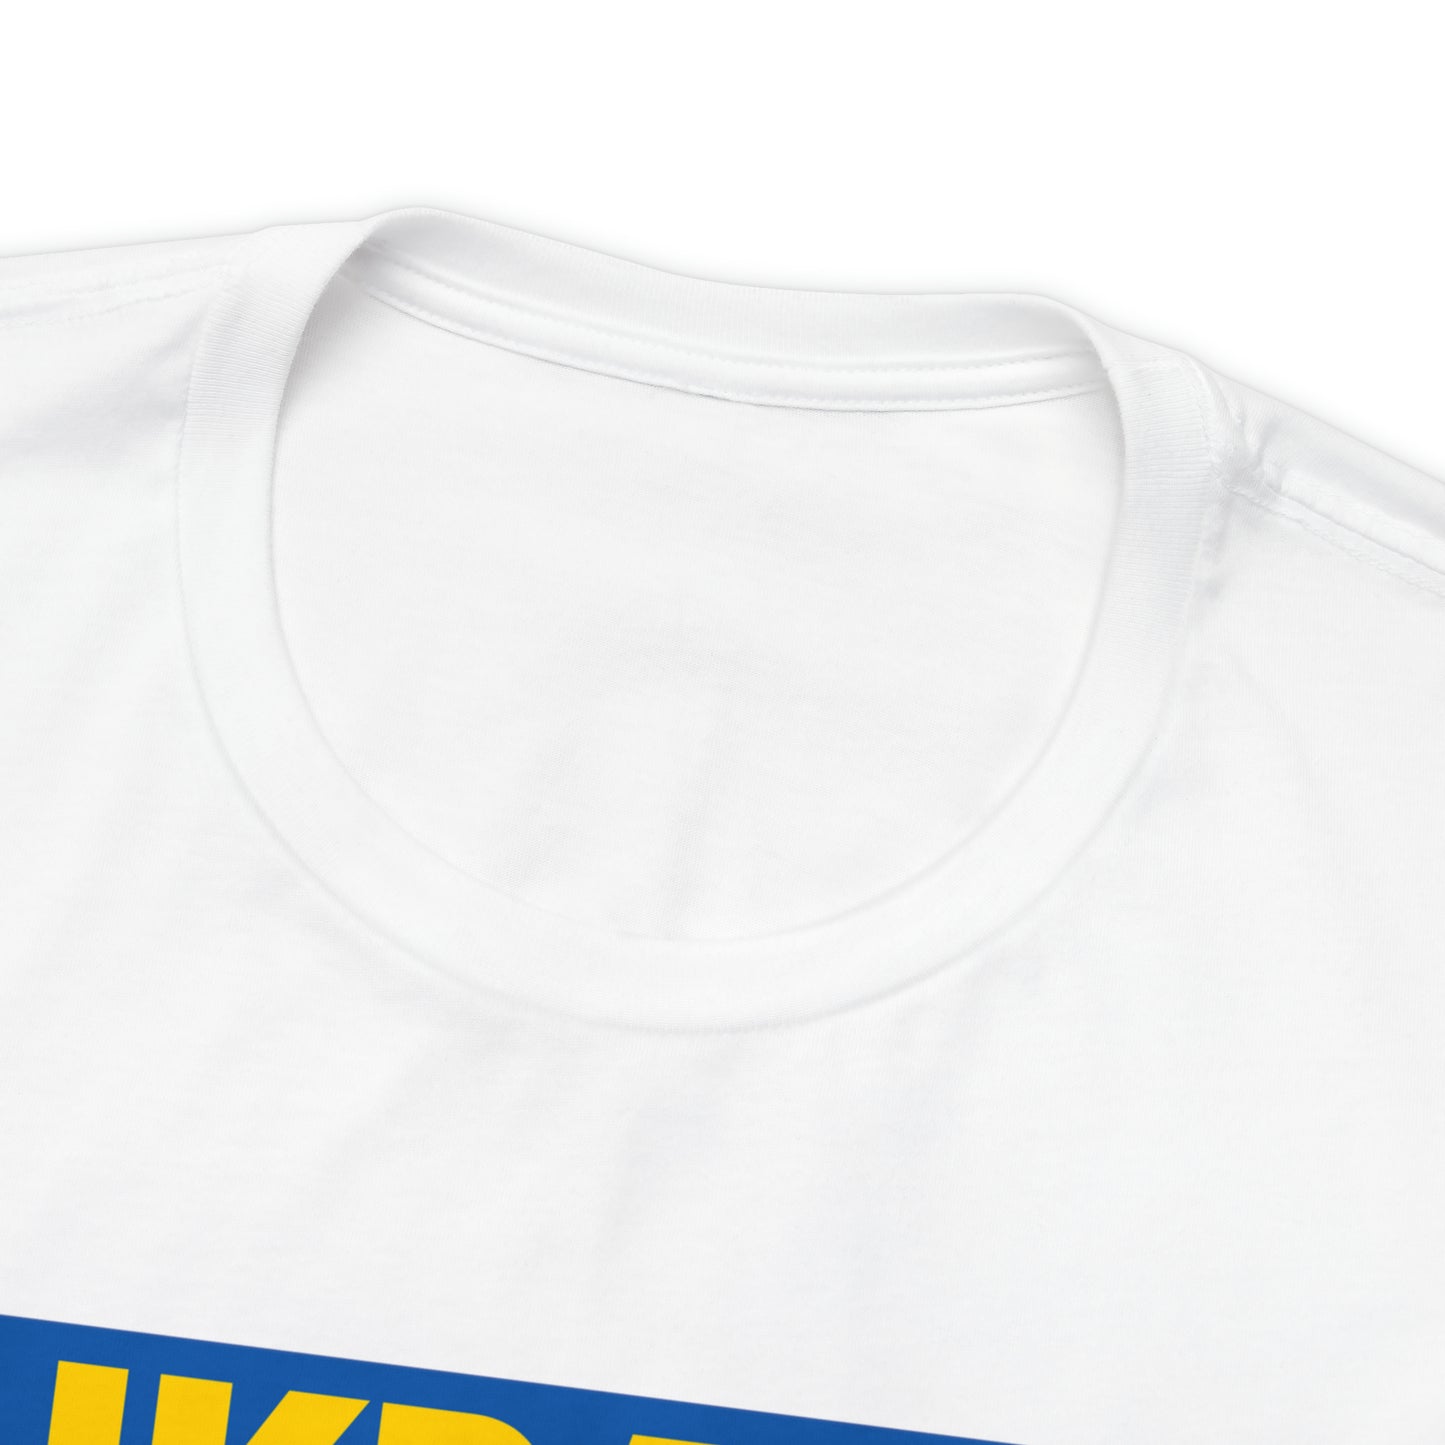 Ukraine Blue Background Unisex T-Shirt